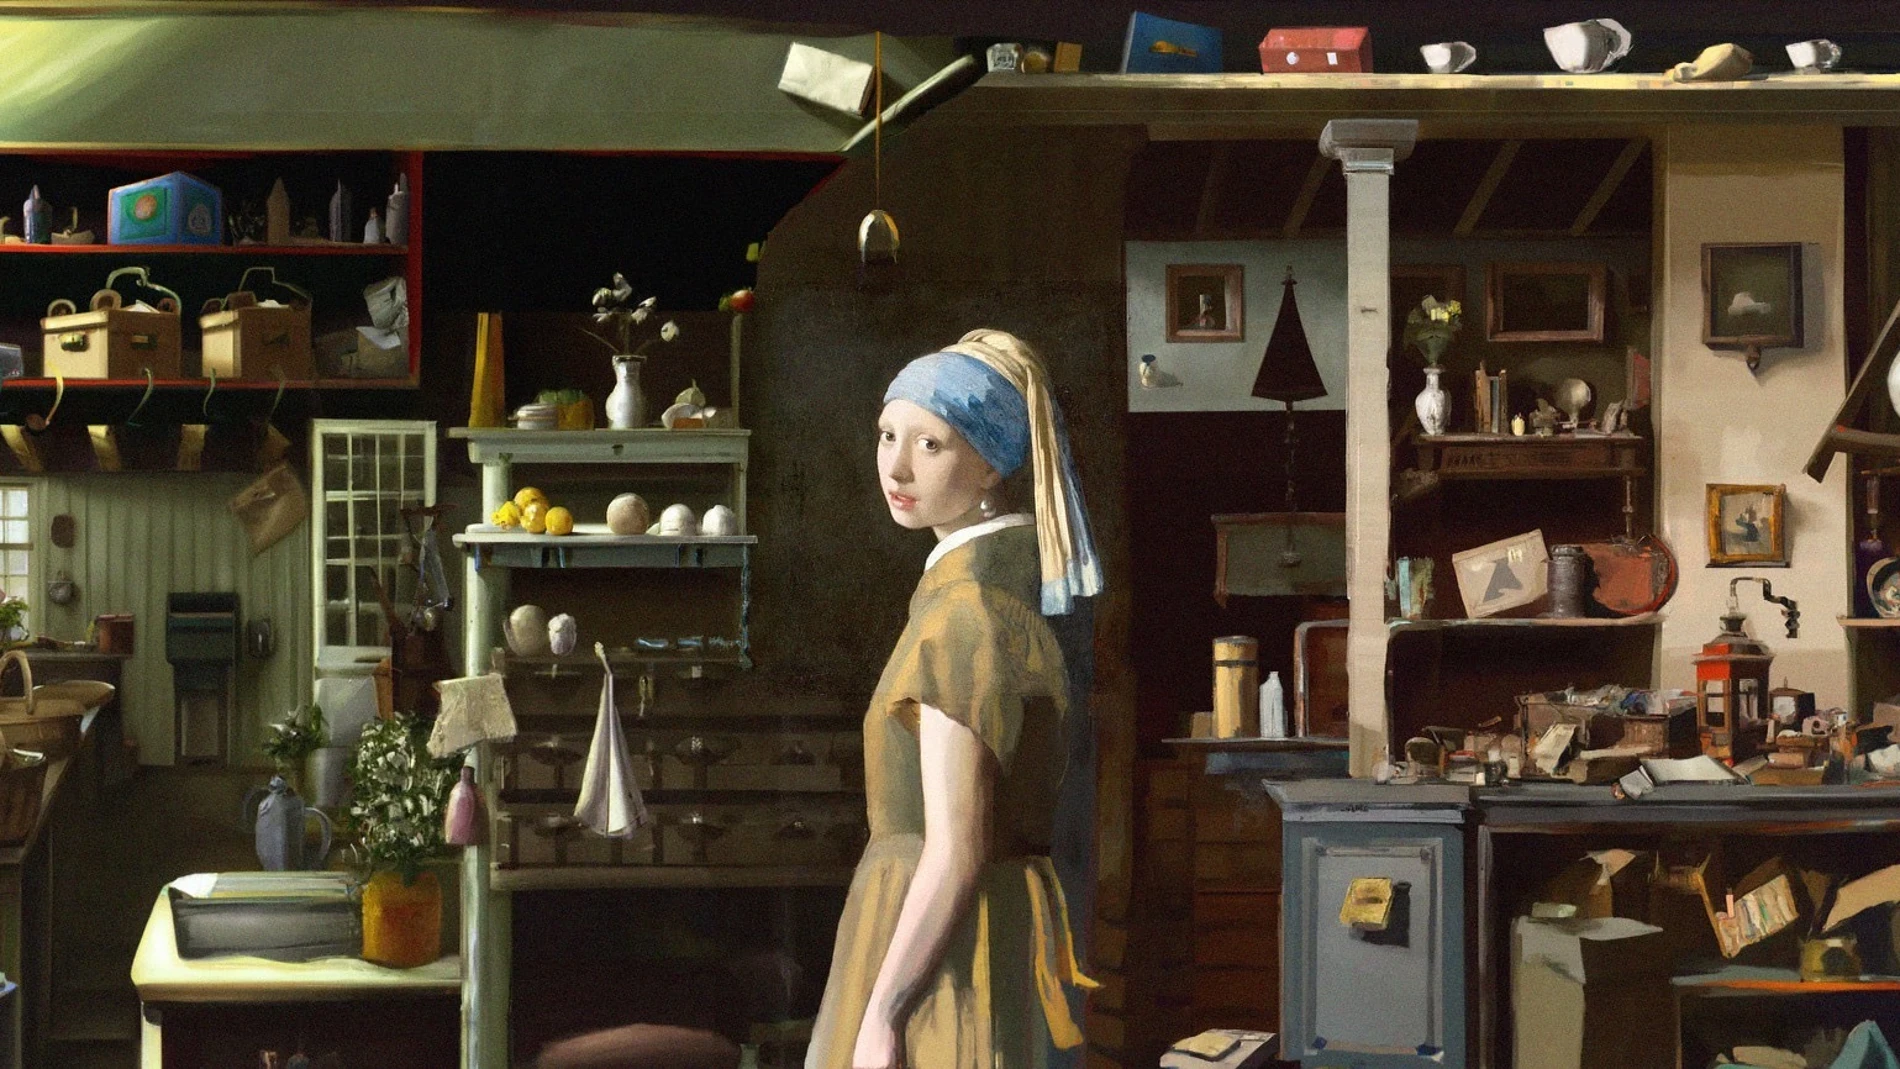 La joven de la perla, de Vermeer, vista por la IA de DALL-E